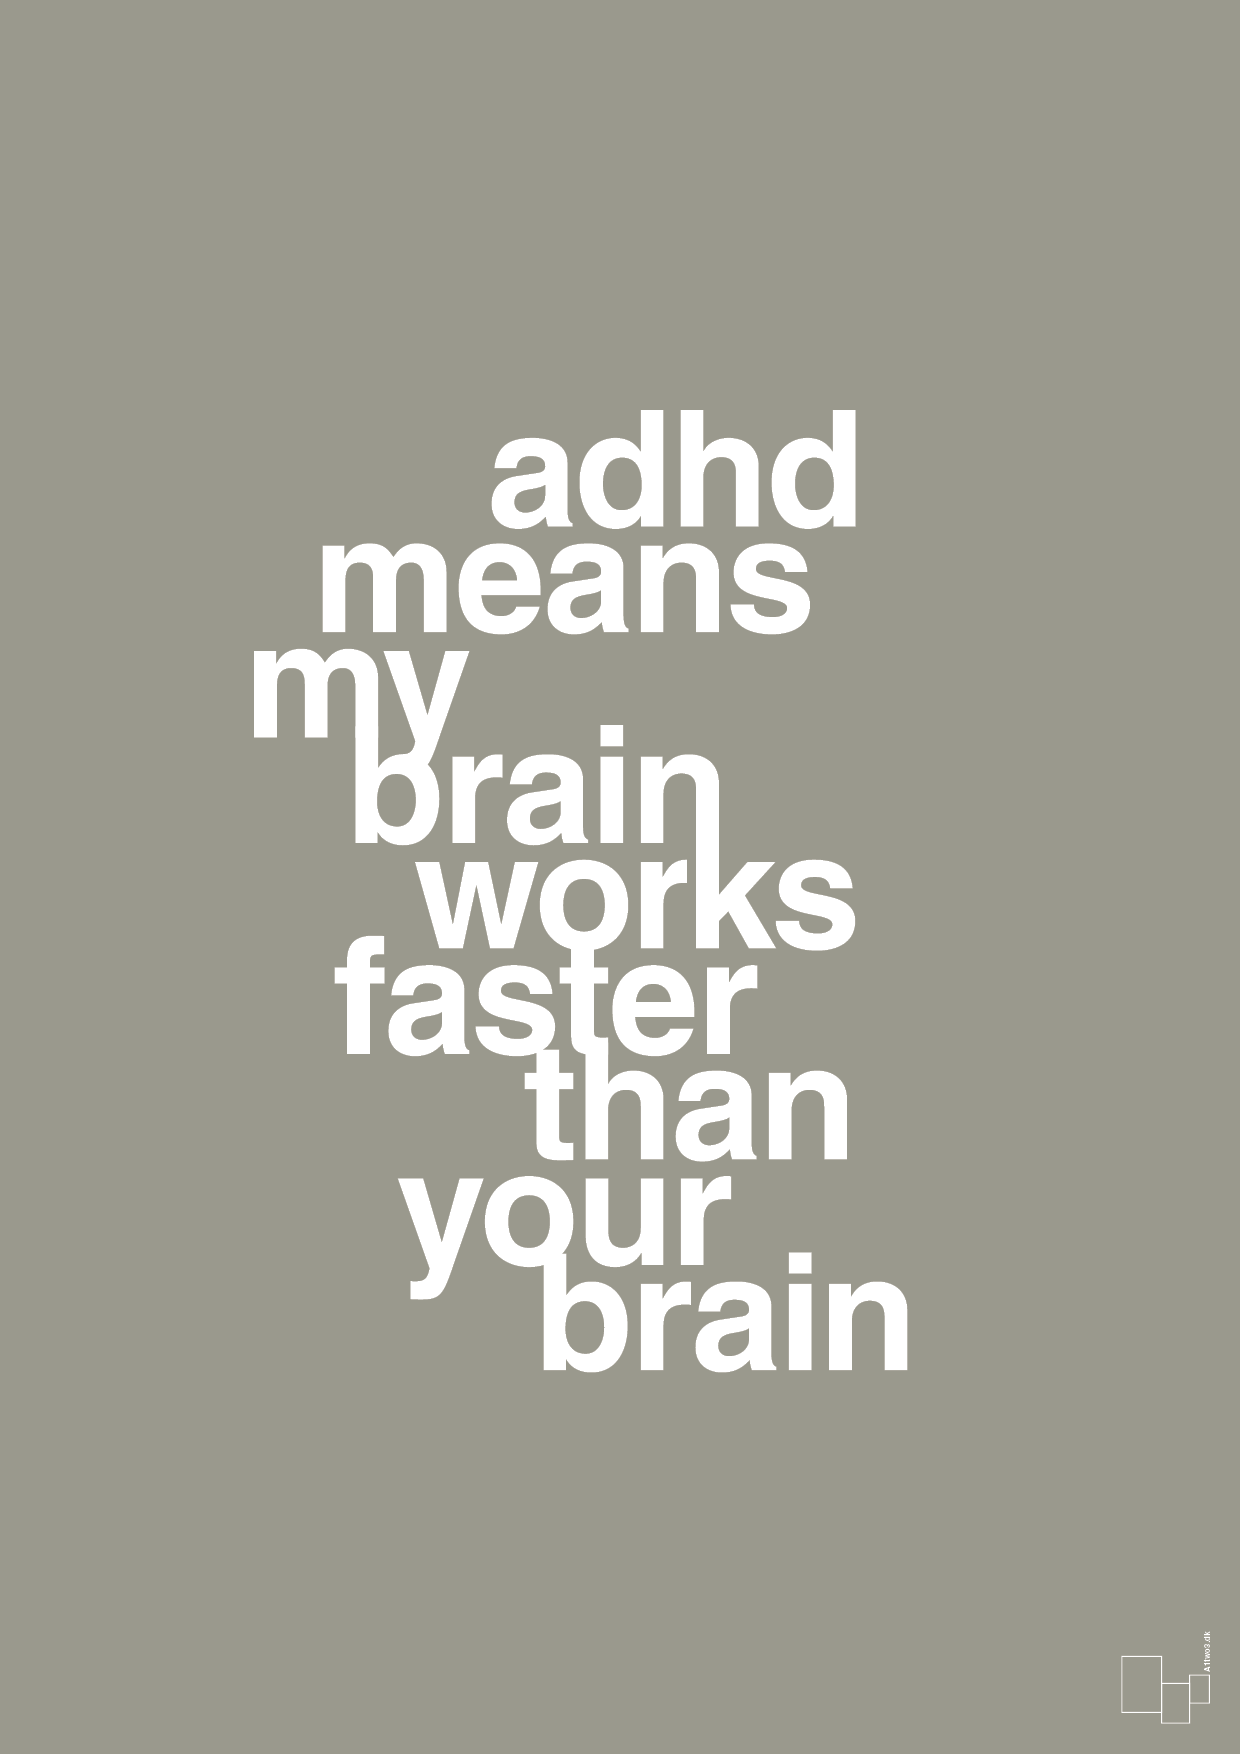 adhd means my brain works faster than your brain - Plakat med Samfund i Battleship Gray